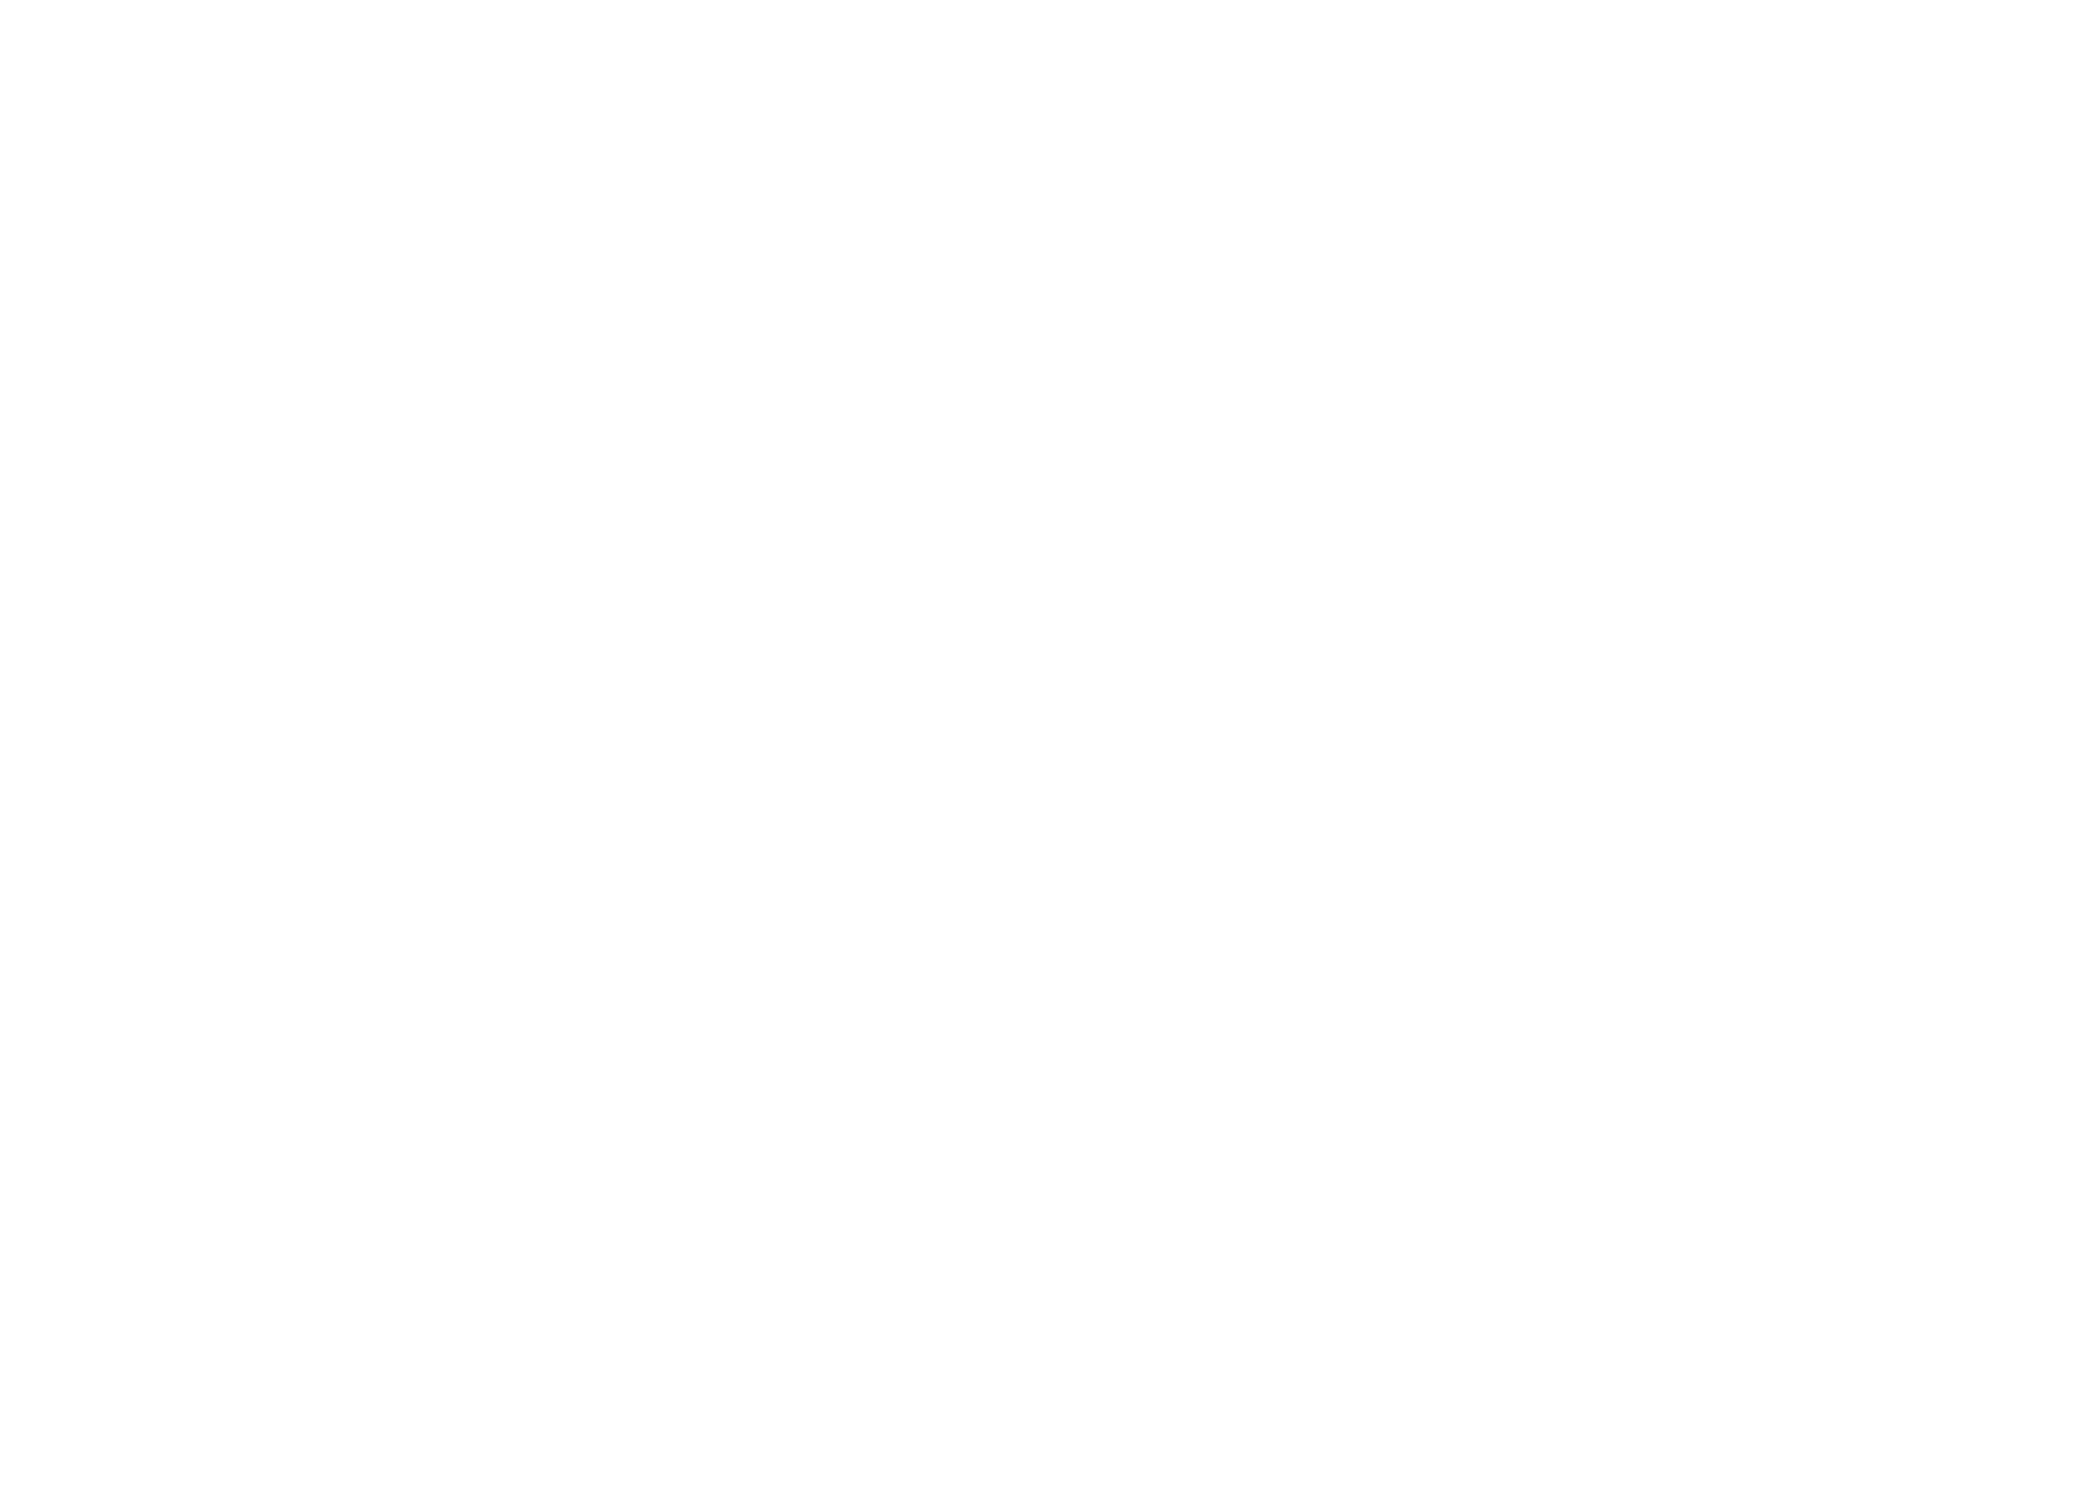 MMM Accounting